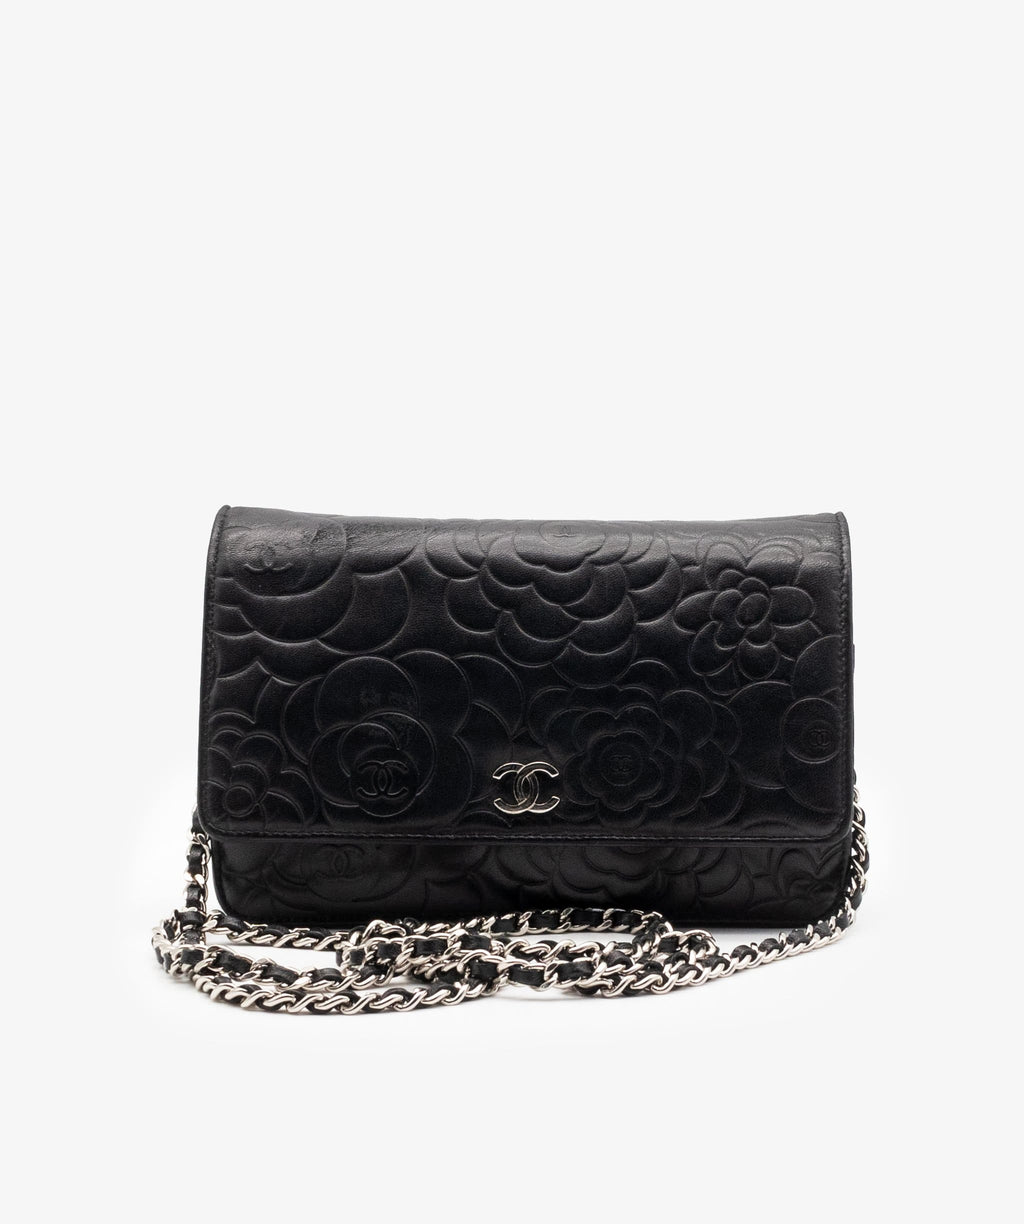 CHANEL Lambskin Camellia Embossed Wallet on Chain WOC Black